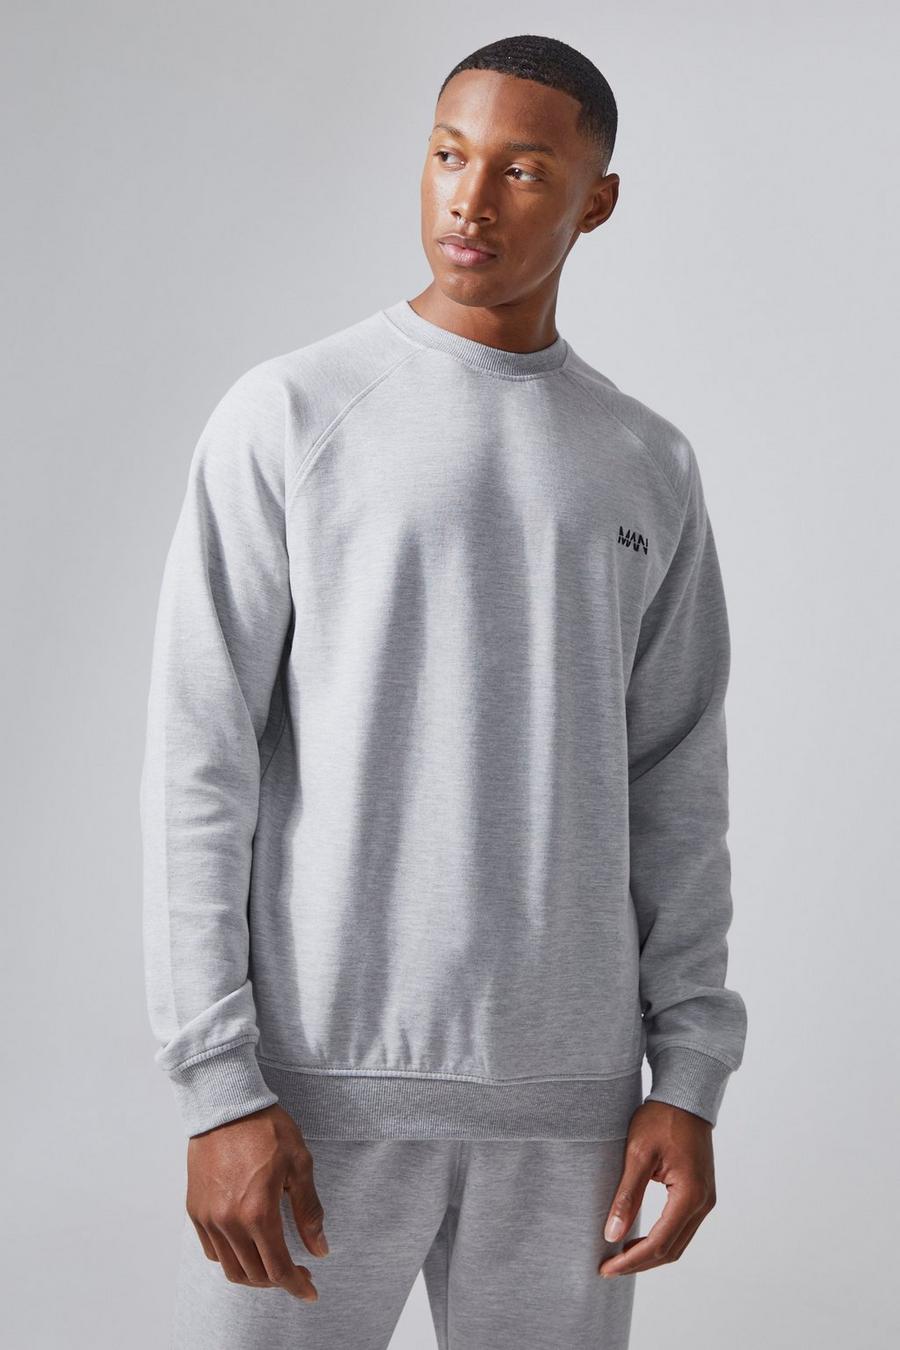 Man Active Sweatshirt, Grey marl image number 1